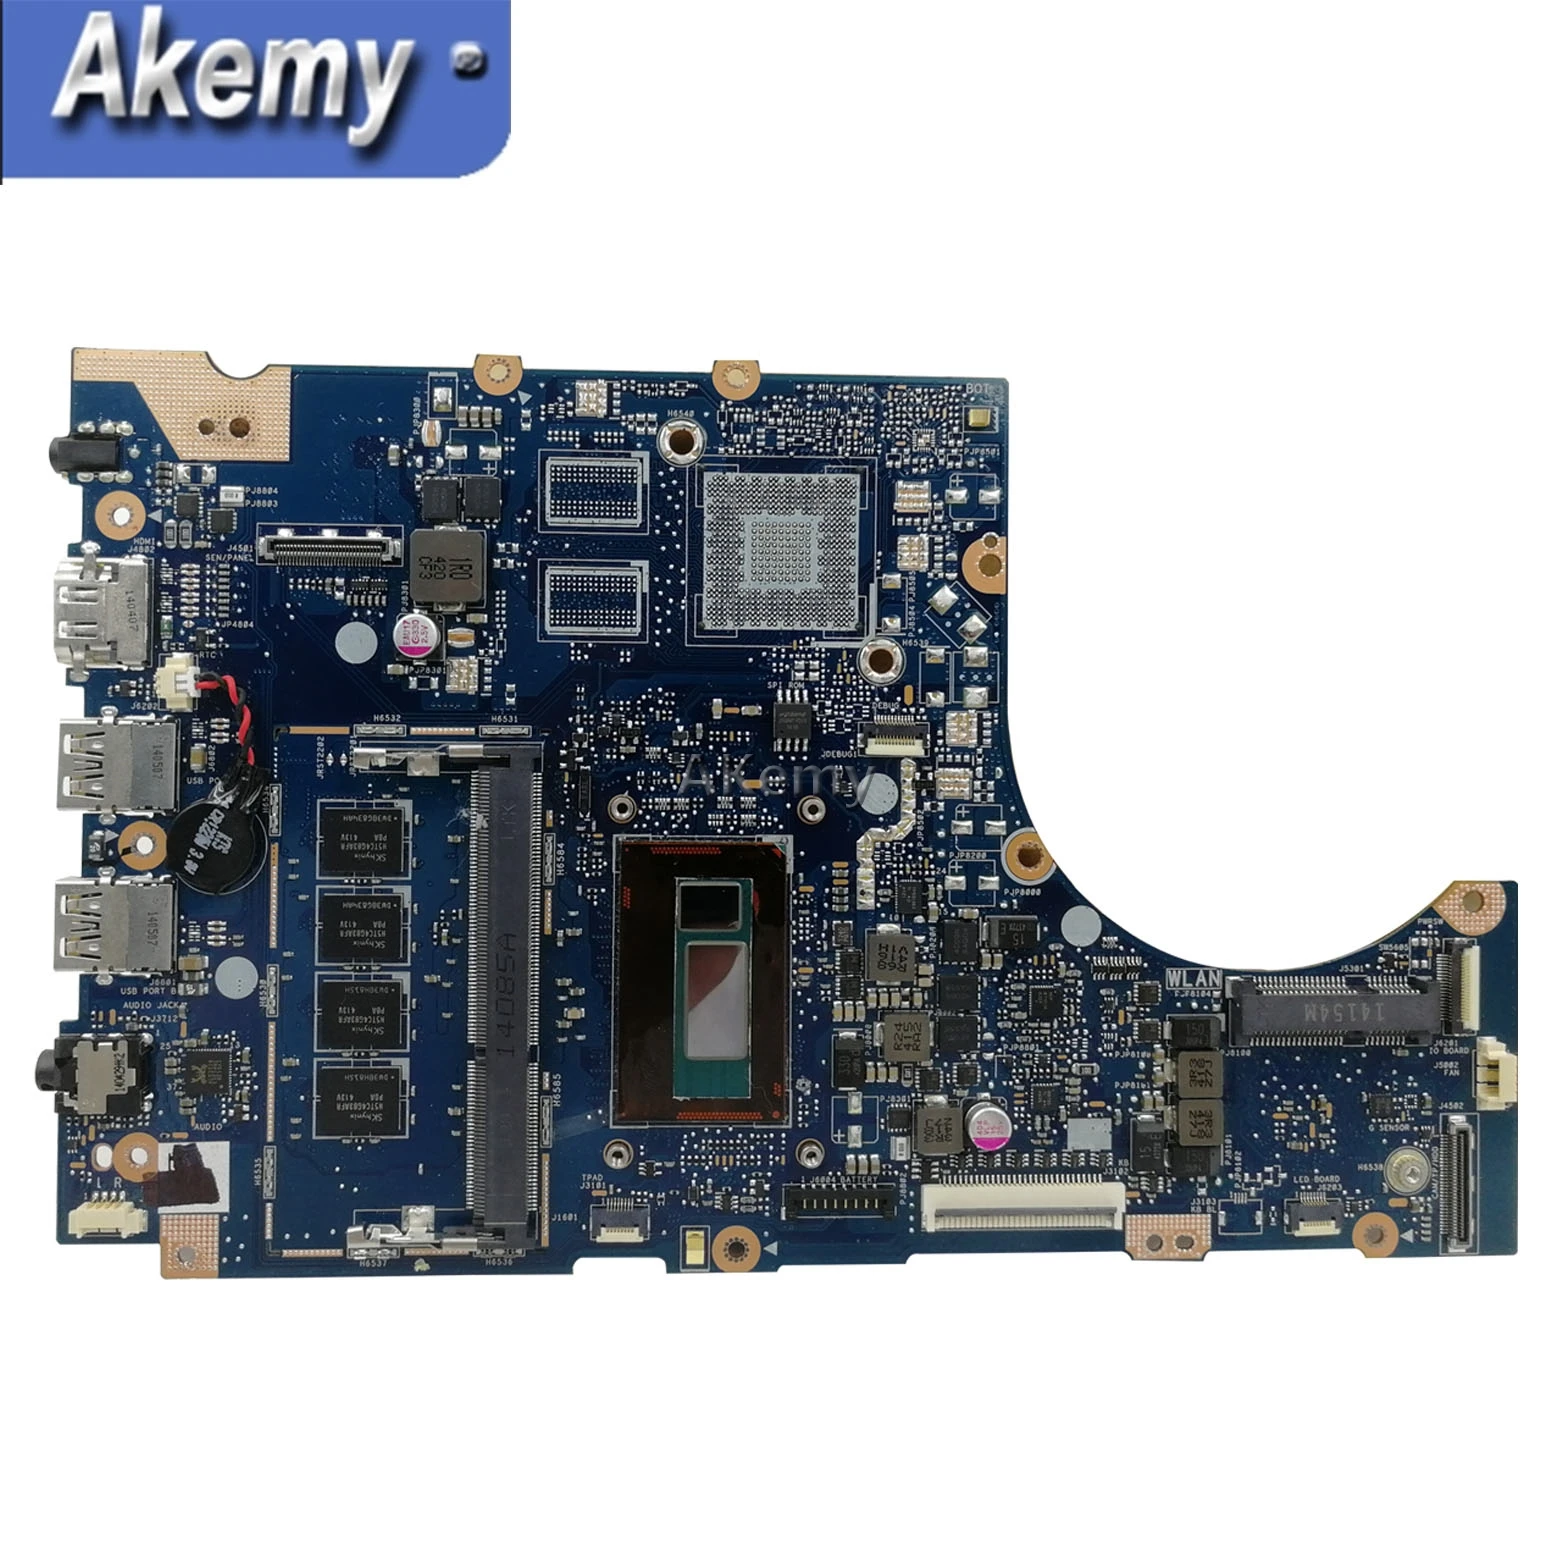 Akemy Q302LAB Материнская плата Asus Q302LA Q302L Q302LAB TP300LA материнская плата для ноутбука 100% тестирование I3-5020U/5010U Процессор 4 Гб Оперативная память